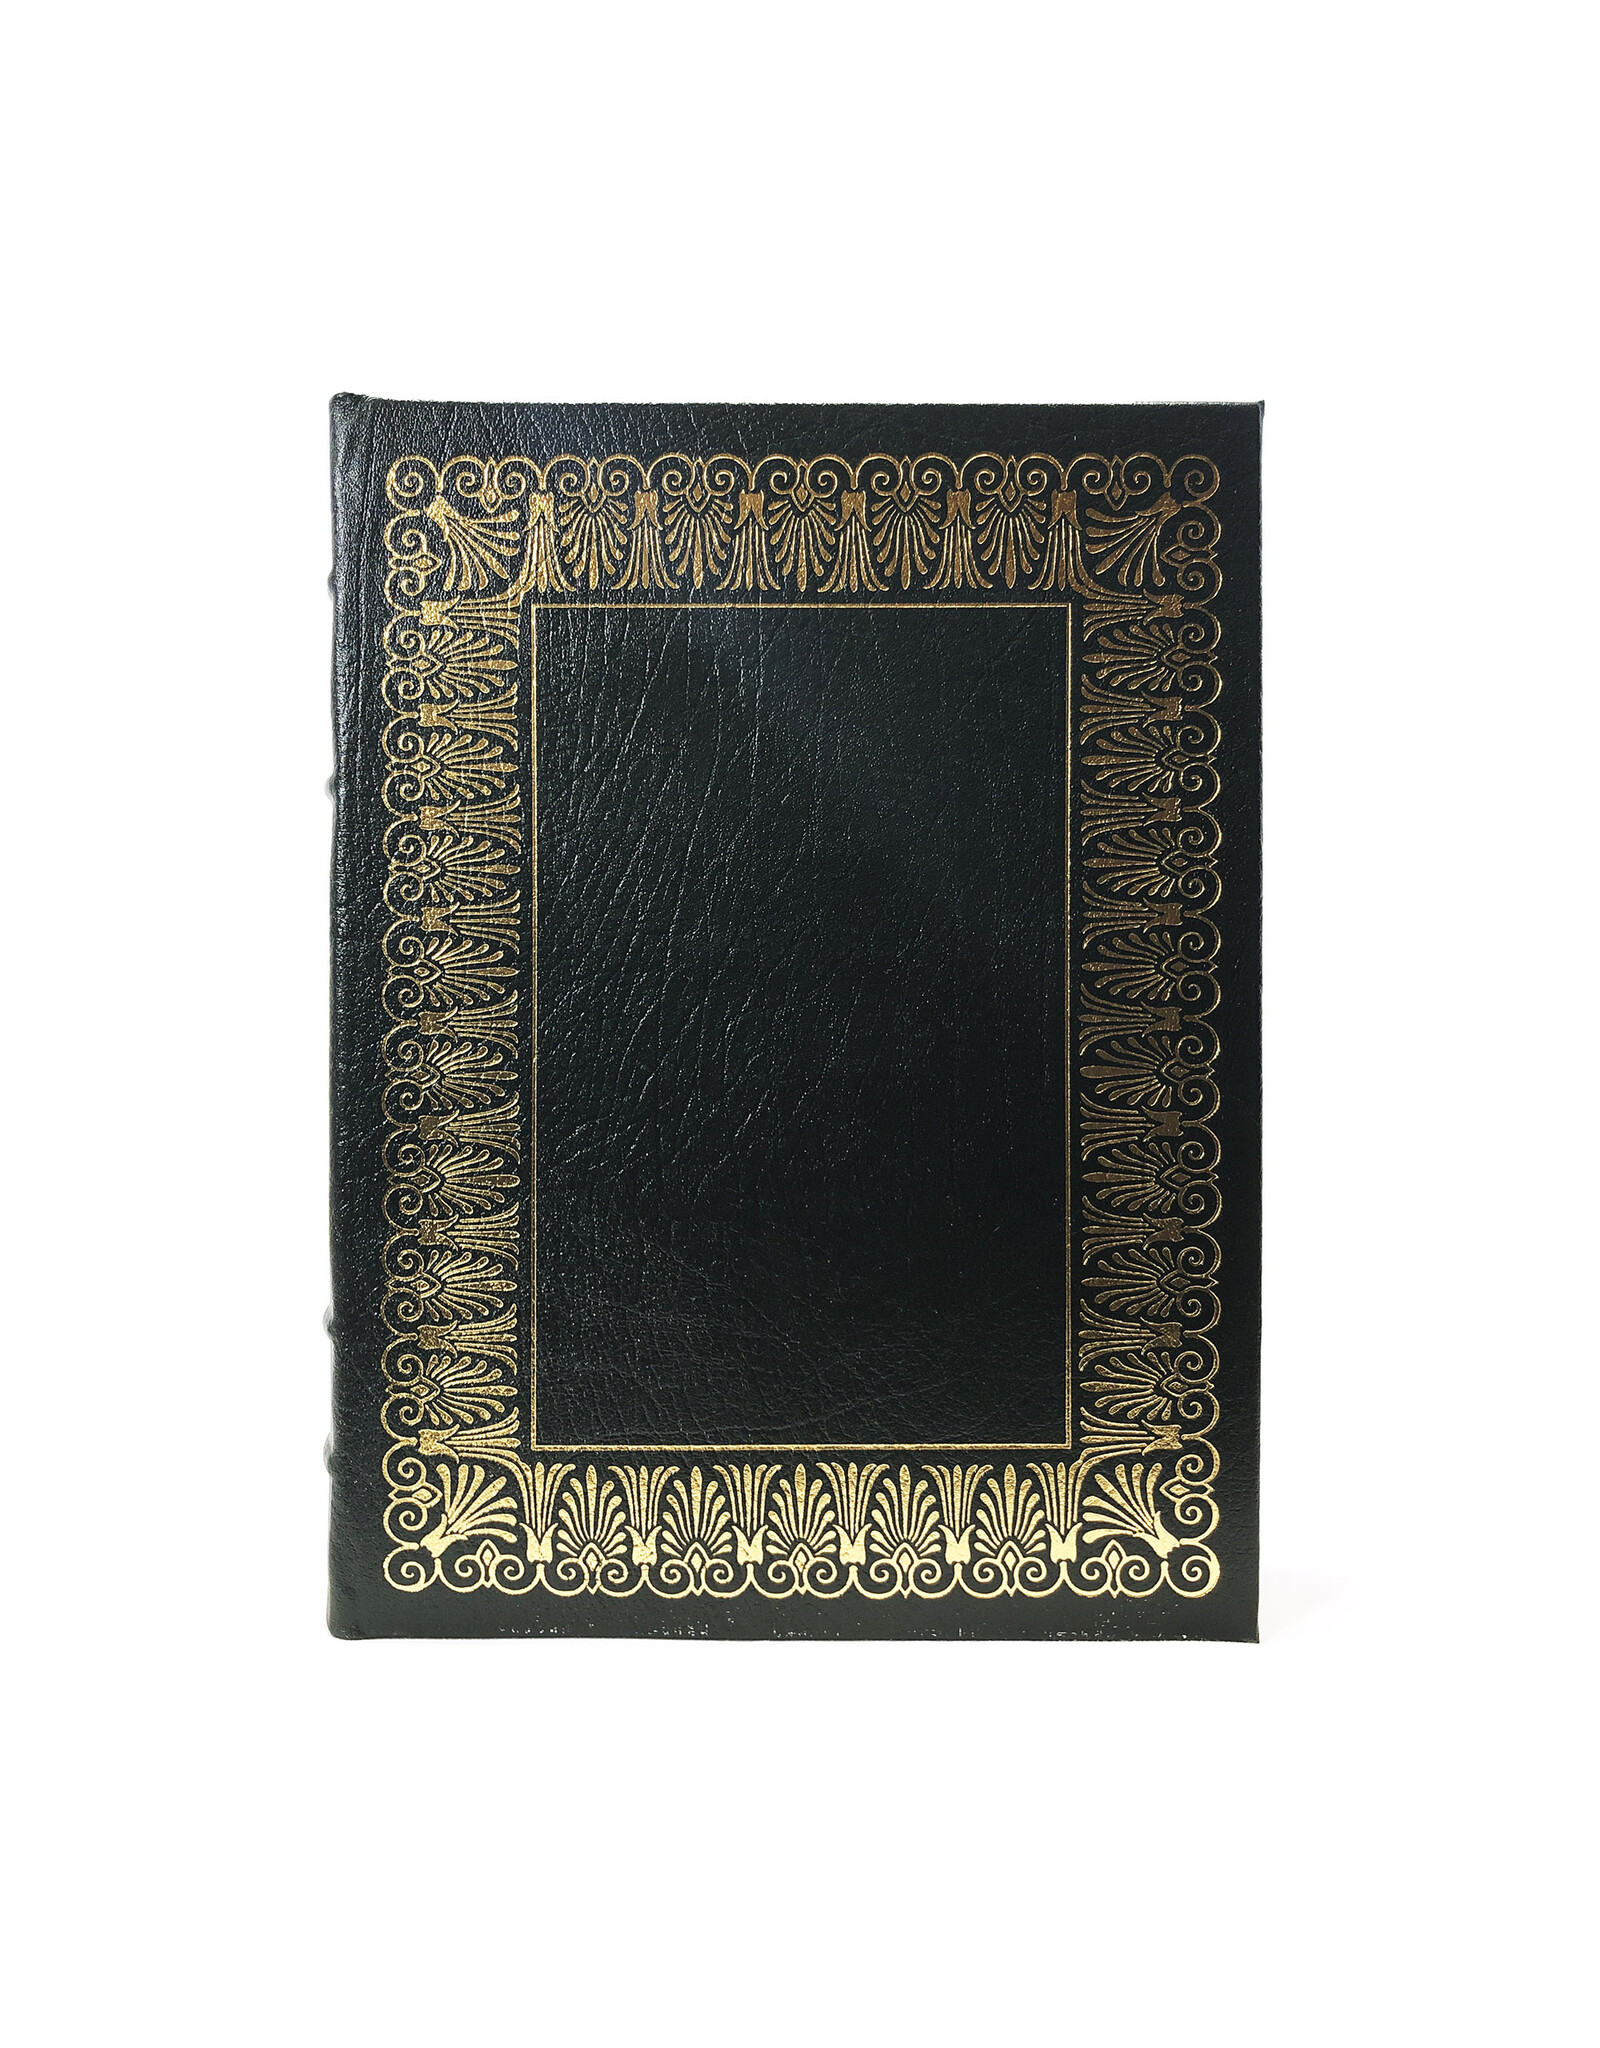 Easton Press Politics & Poetics 100 Greatest Books Ever Written Genuine Leather Collector's Edition